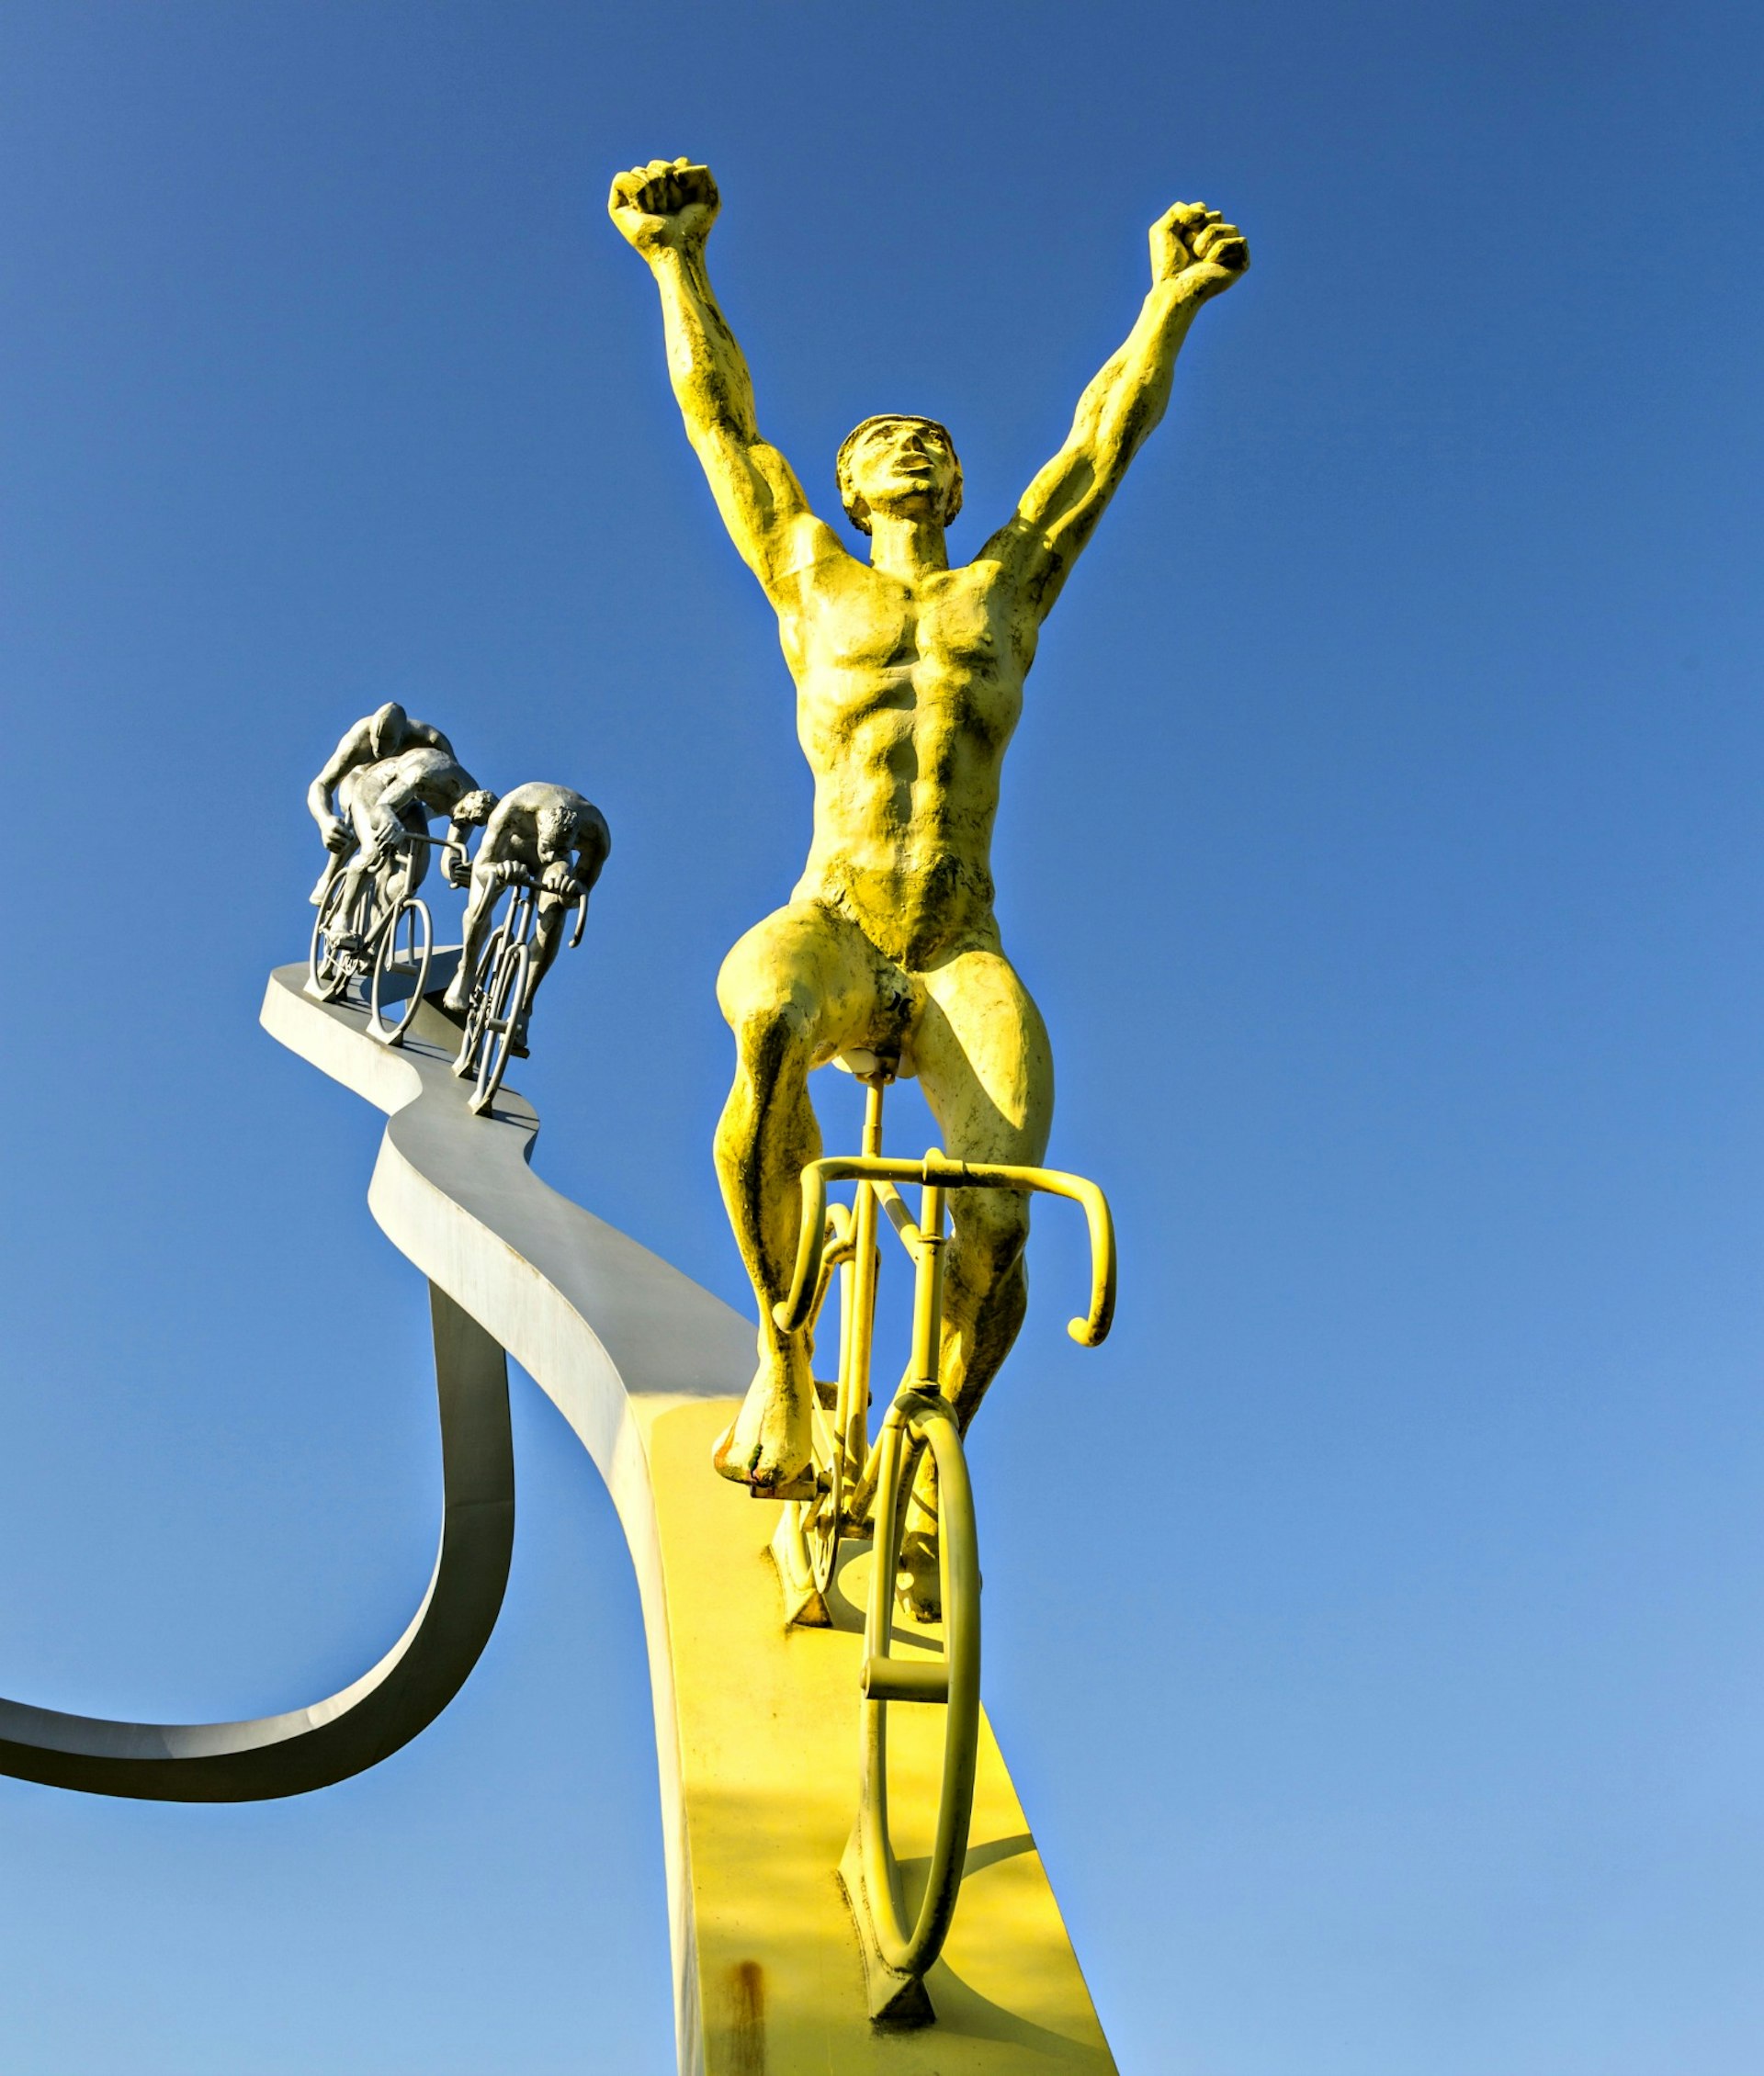 The Tour de France sculpture in the Pyrenees by Jean-Bernard Metais